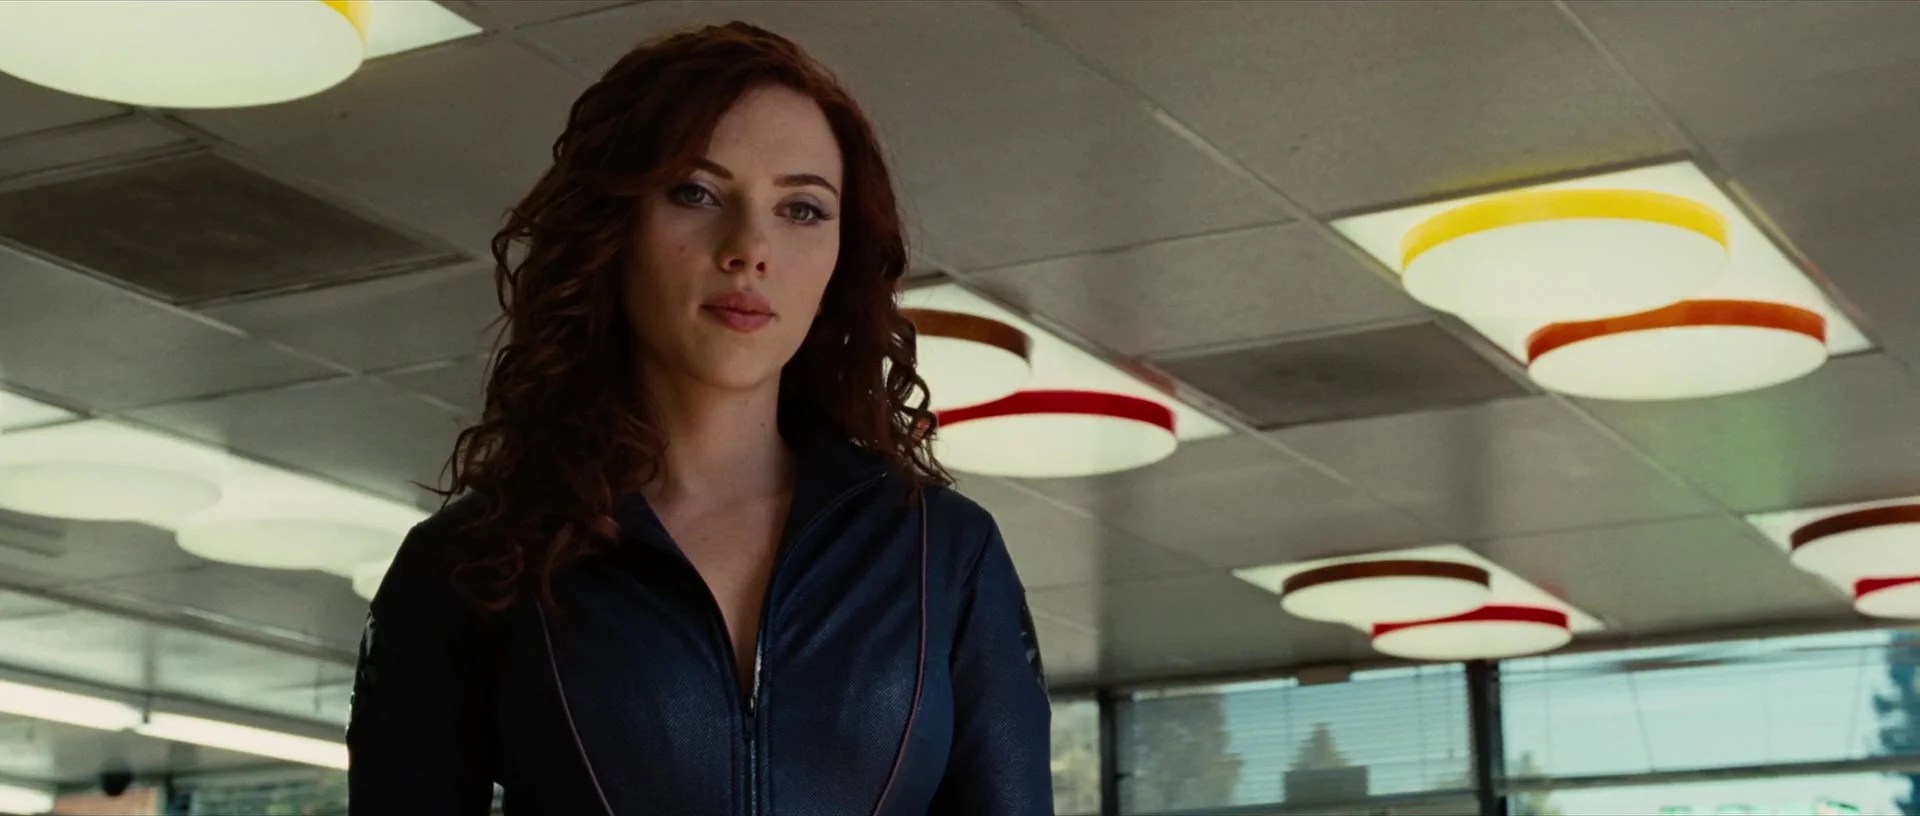 Black Widow (Scarlett Johansson) reveals her identity as an Agent of S.H.I.E.L.D. in Iron Man 2 (2010), Marvel Entertainment via Blu-ray